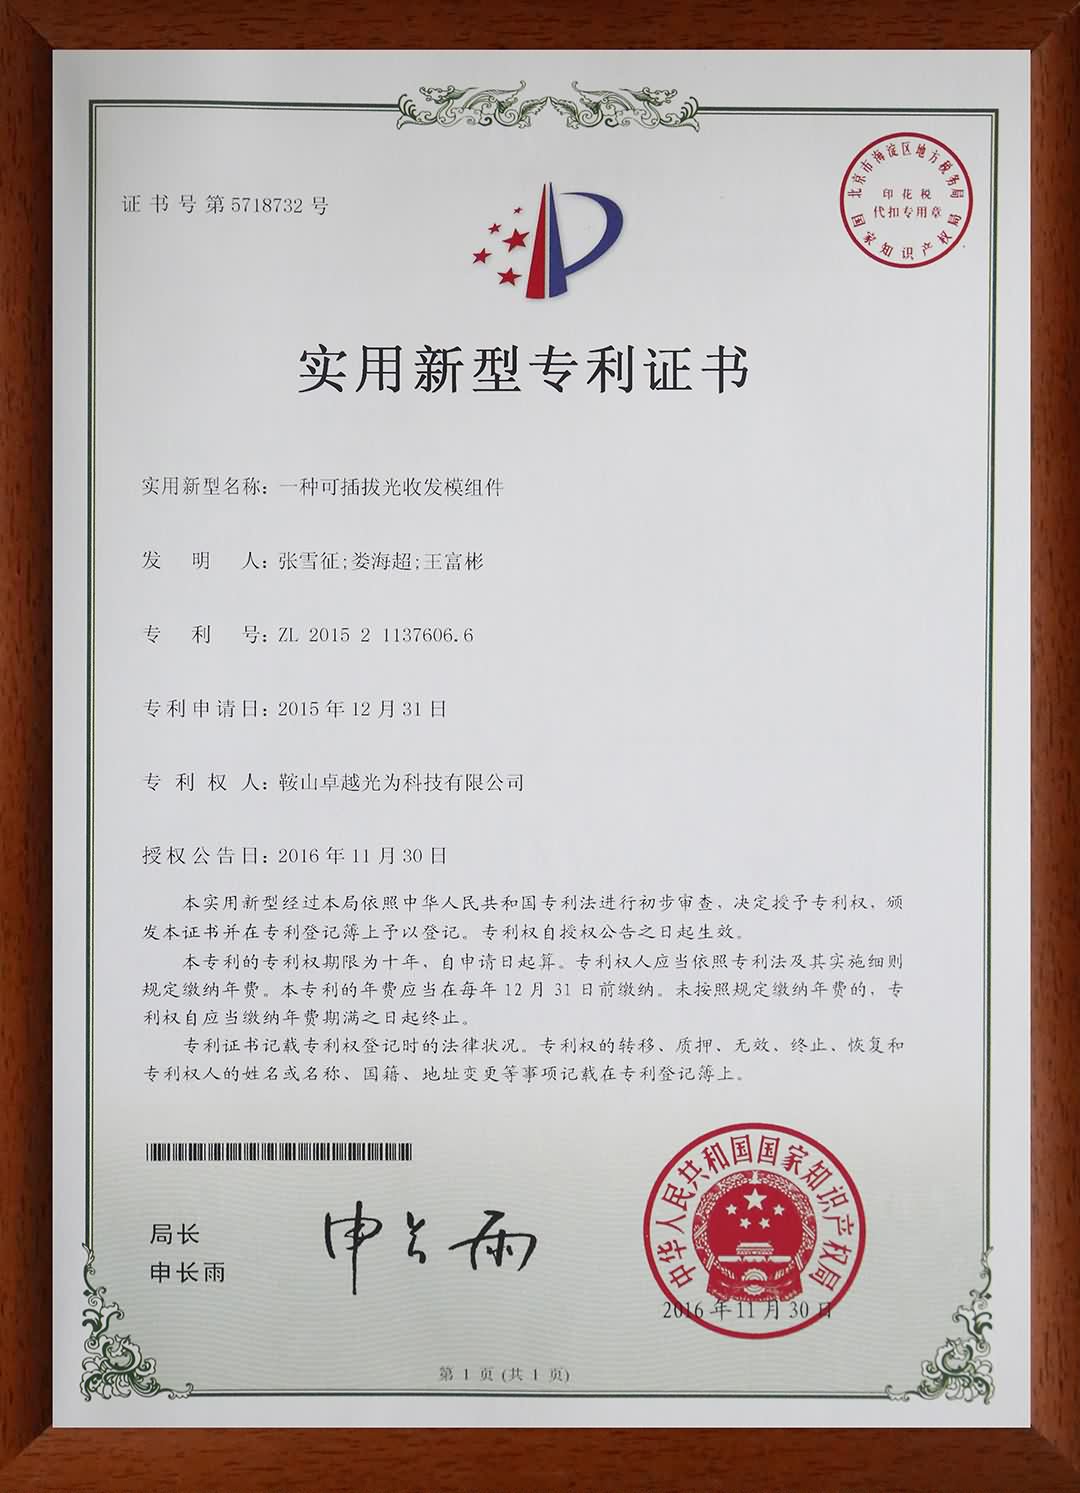 Paten certificate 3